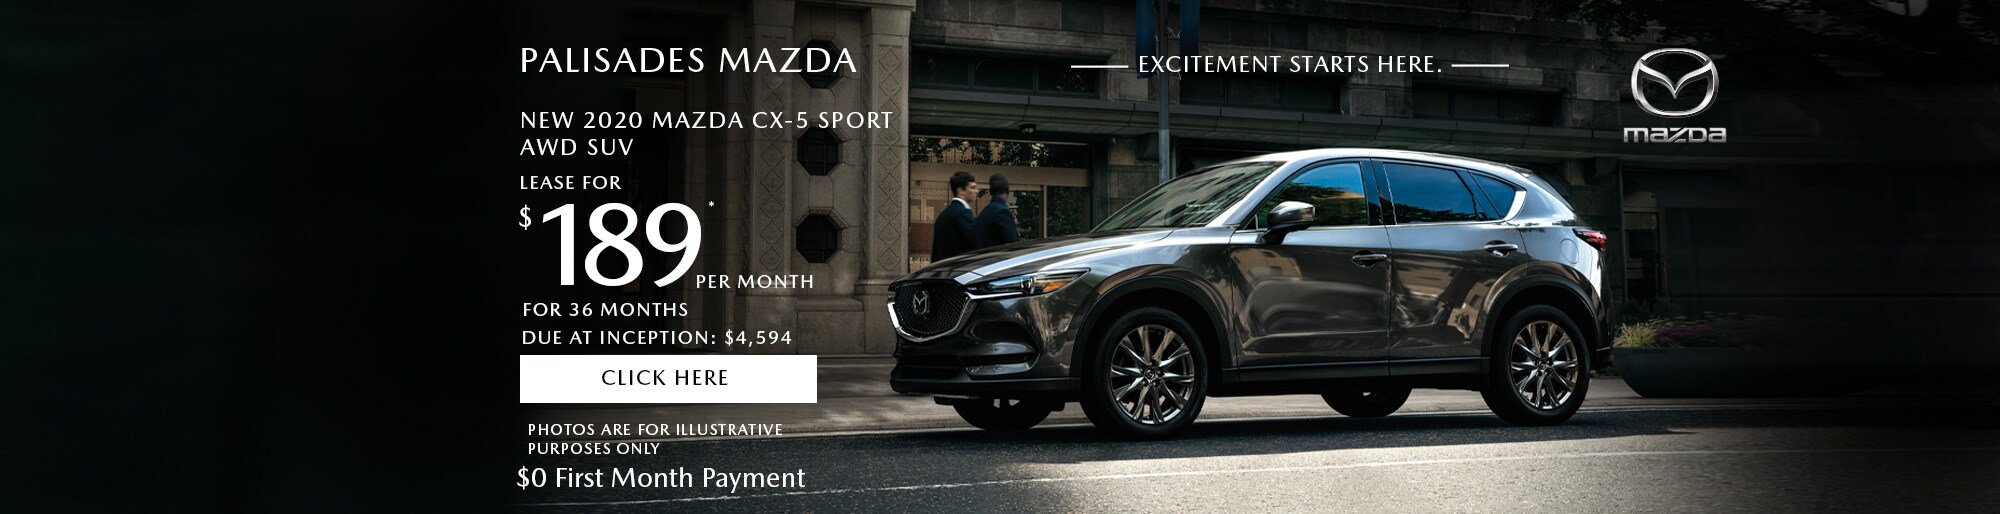 Mazda Lease Deals June 2020